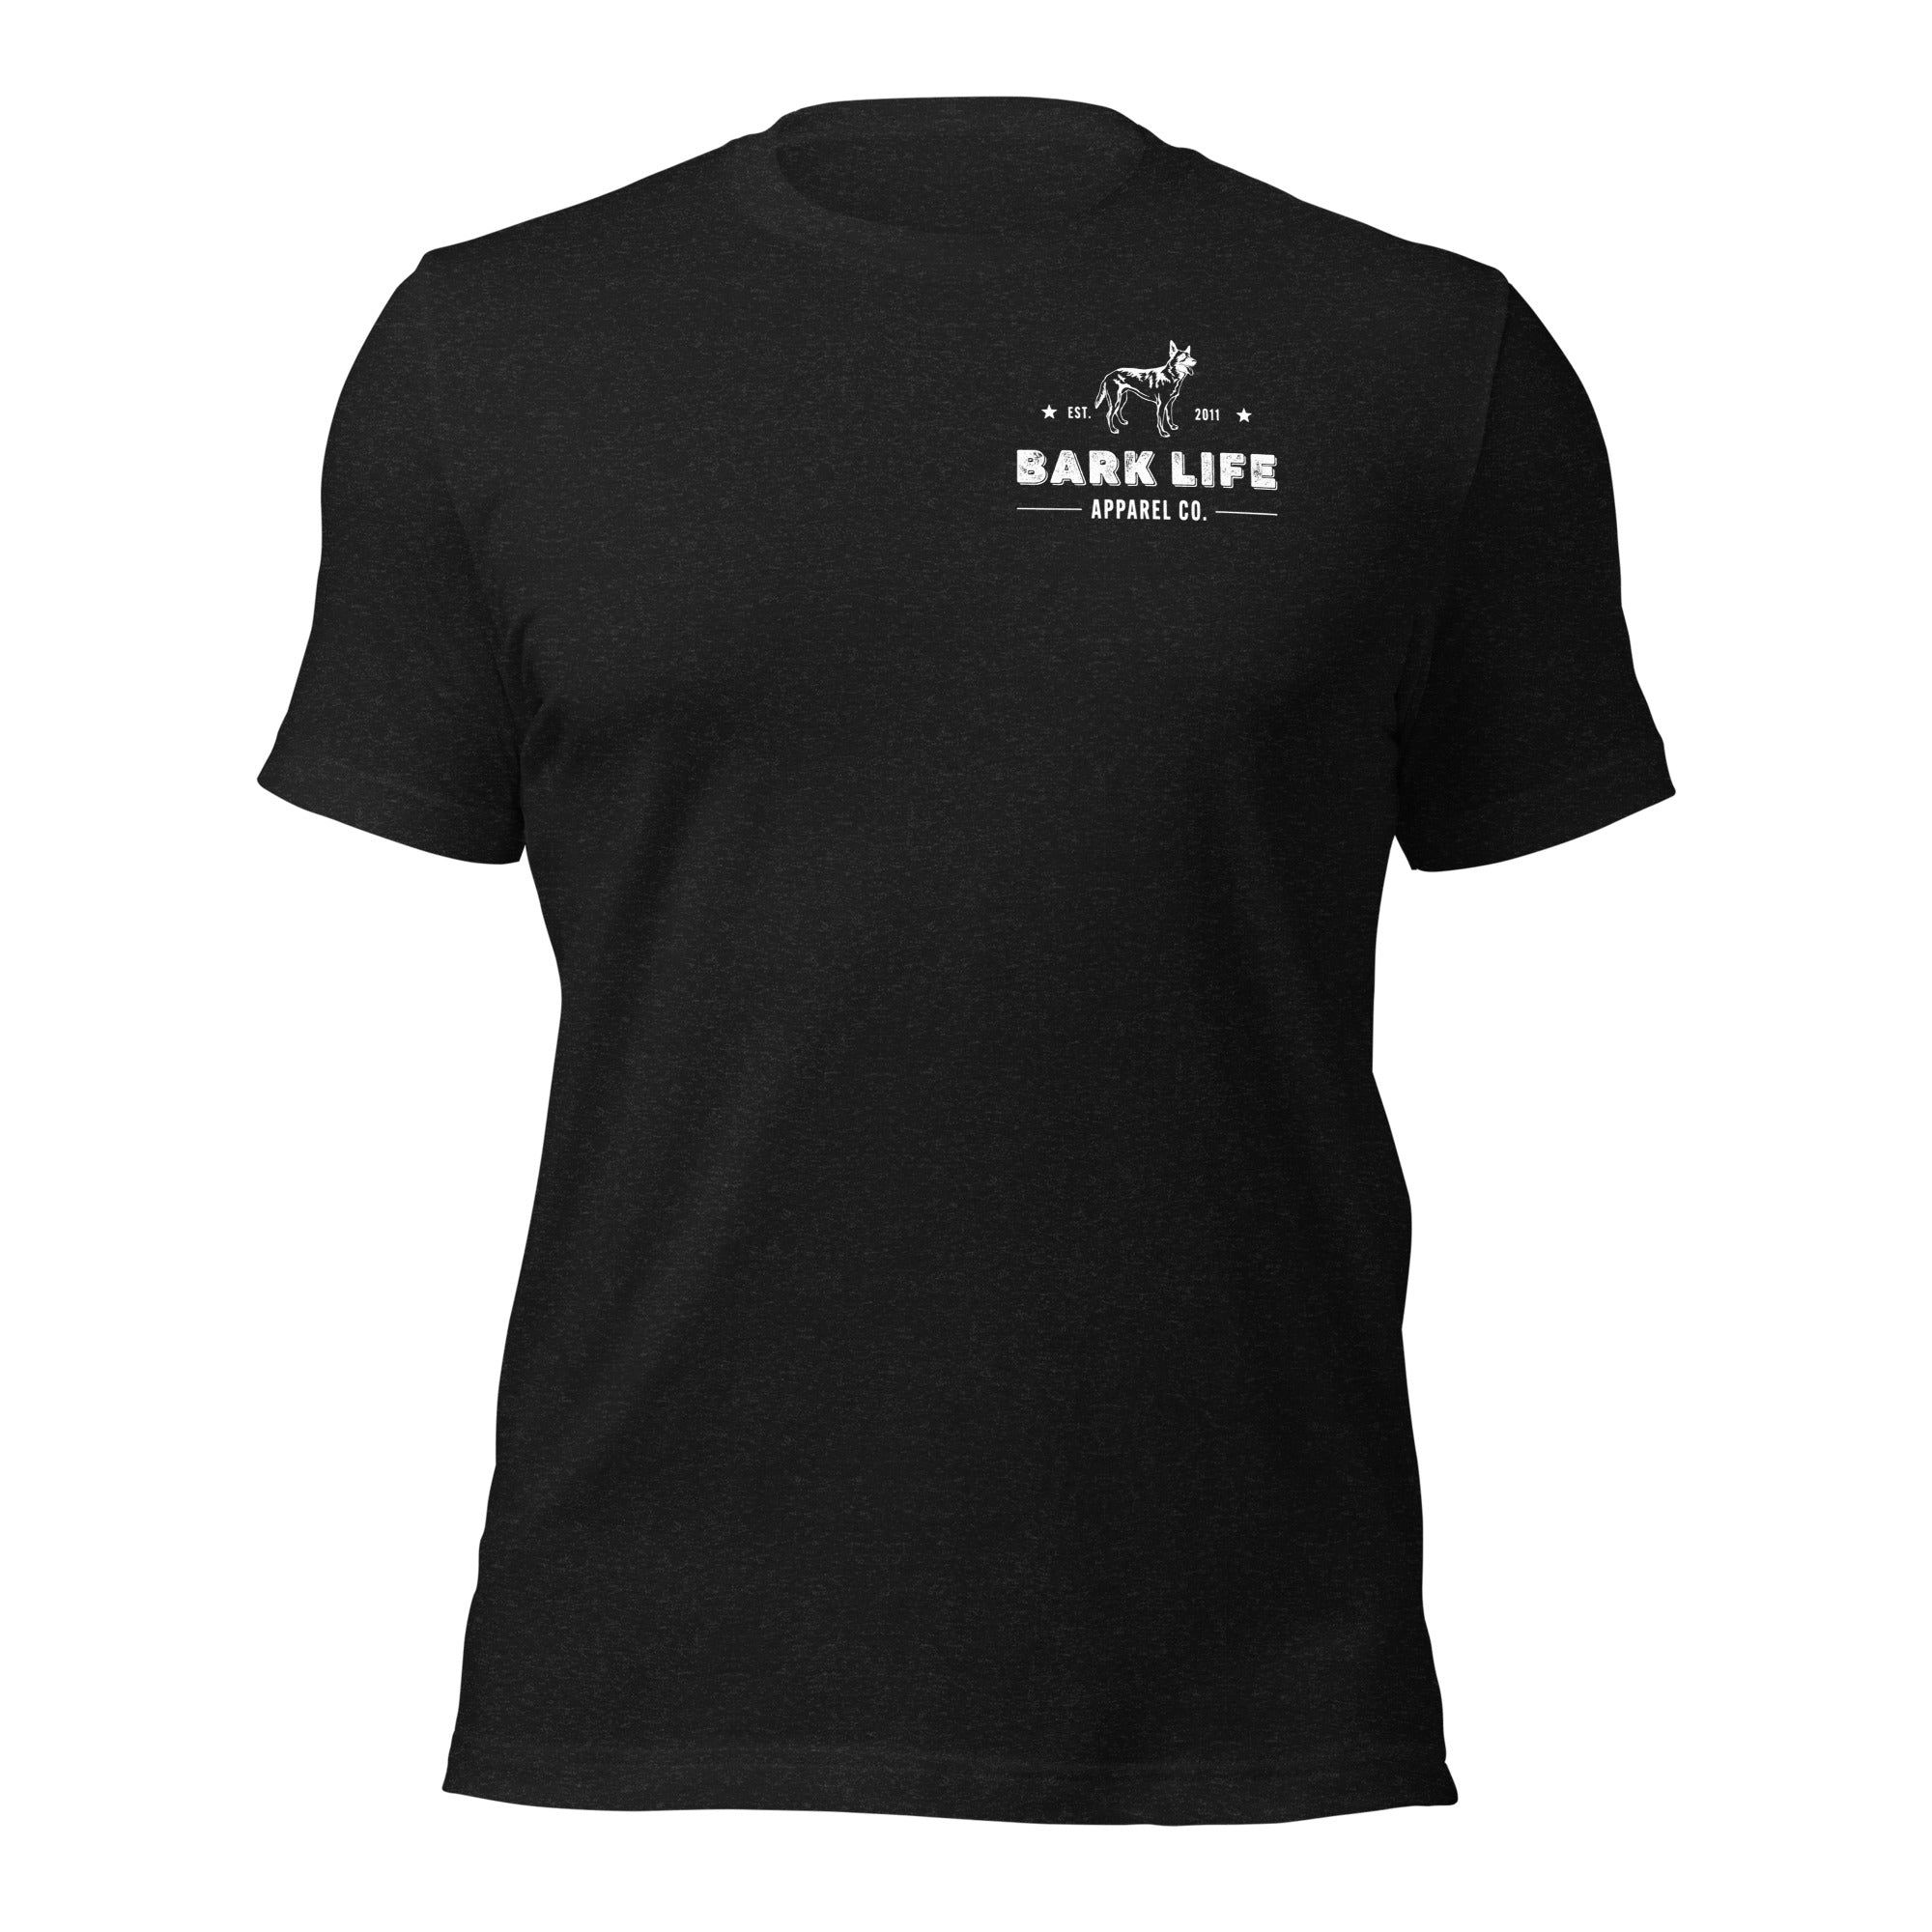 Belgian Malinois - Short Sleeve Cotton Tee  Shirt